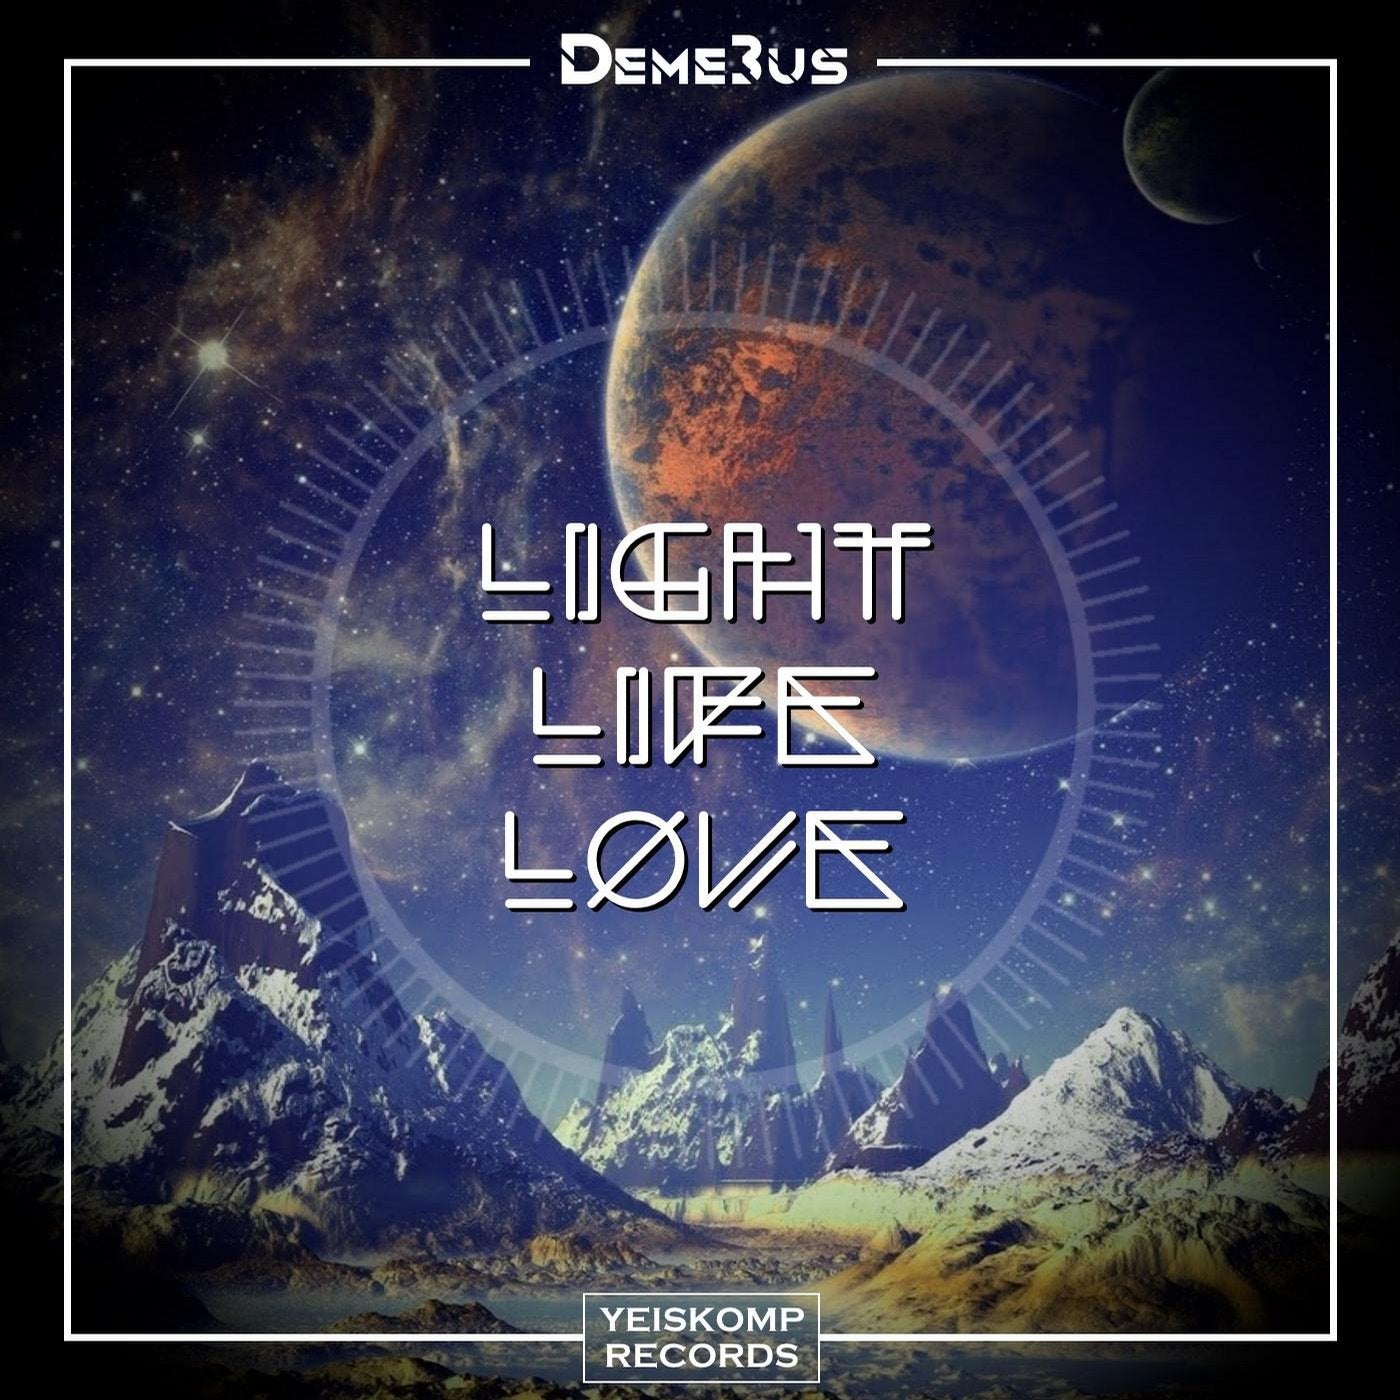 Light. Life. Love